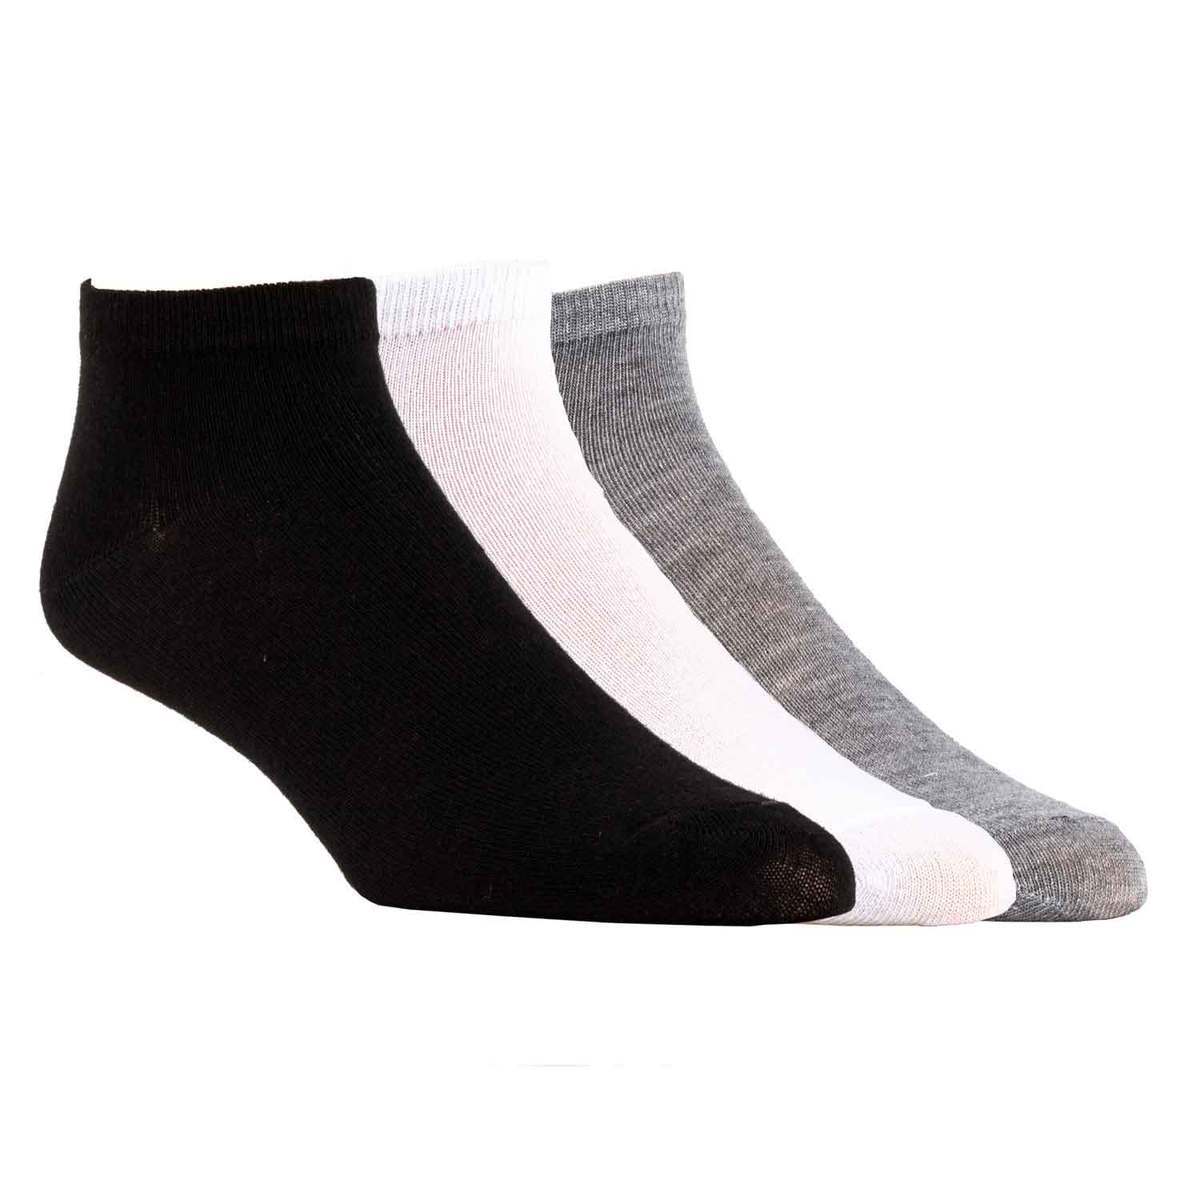 Sockhub Men's Low Cut 10 Pack Casual Socks - Black - L - Black L ...